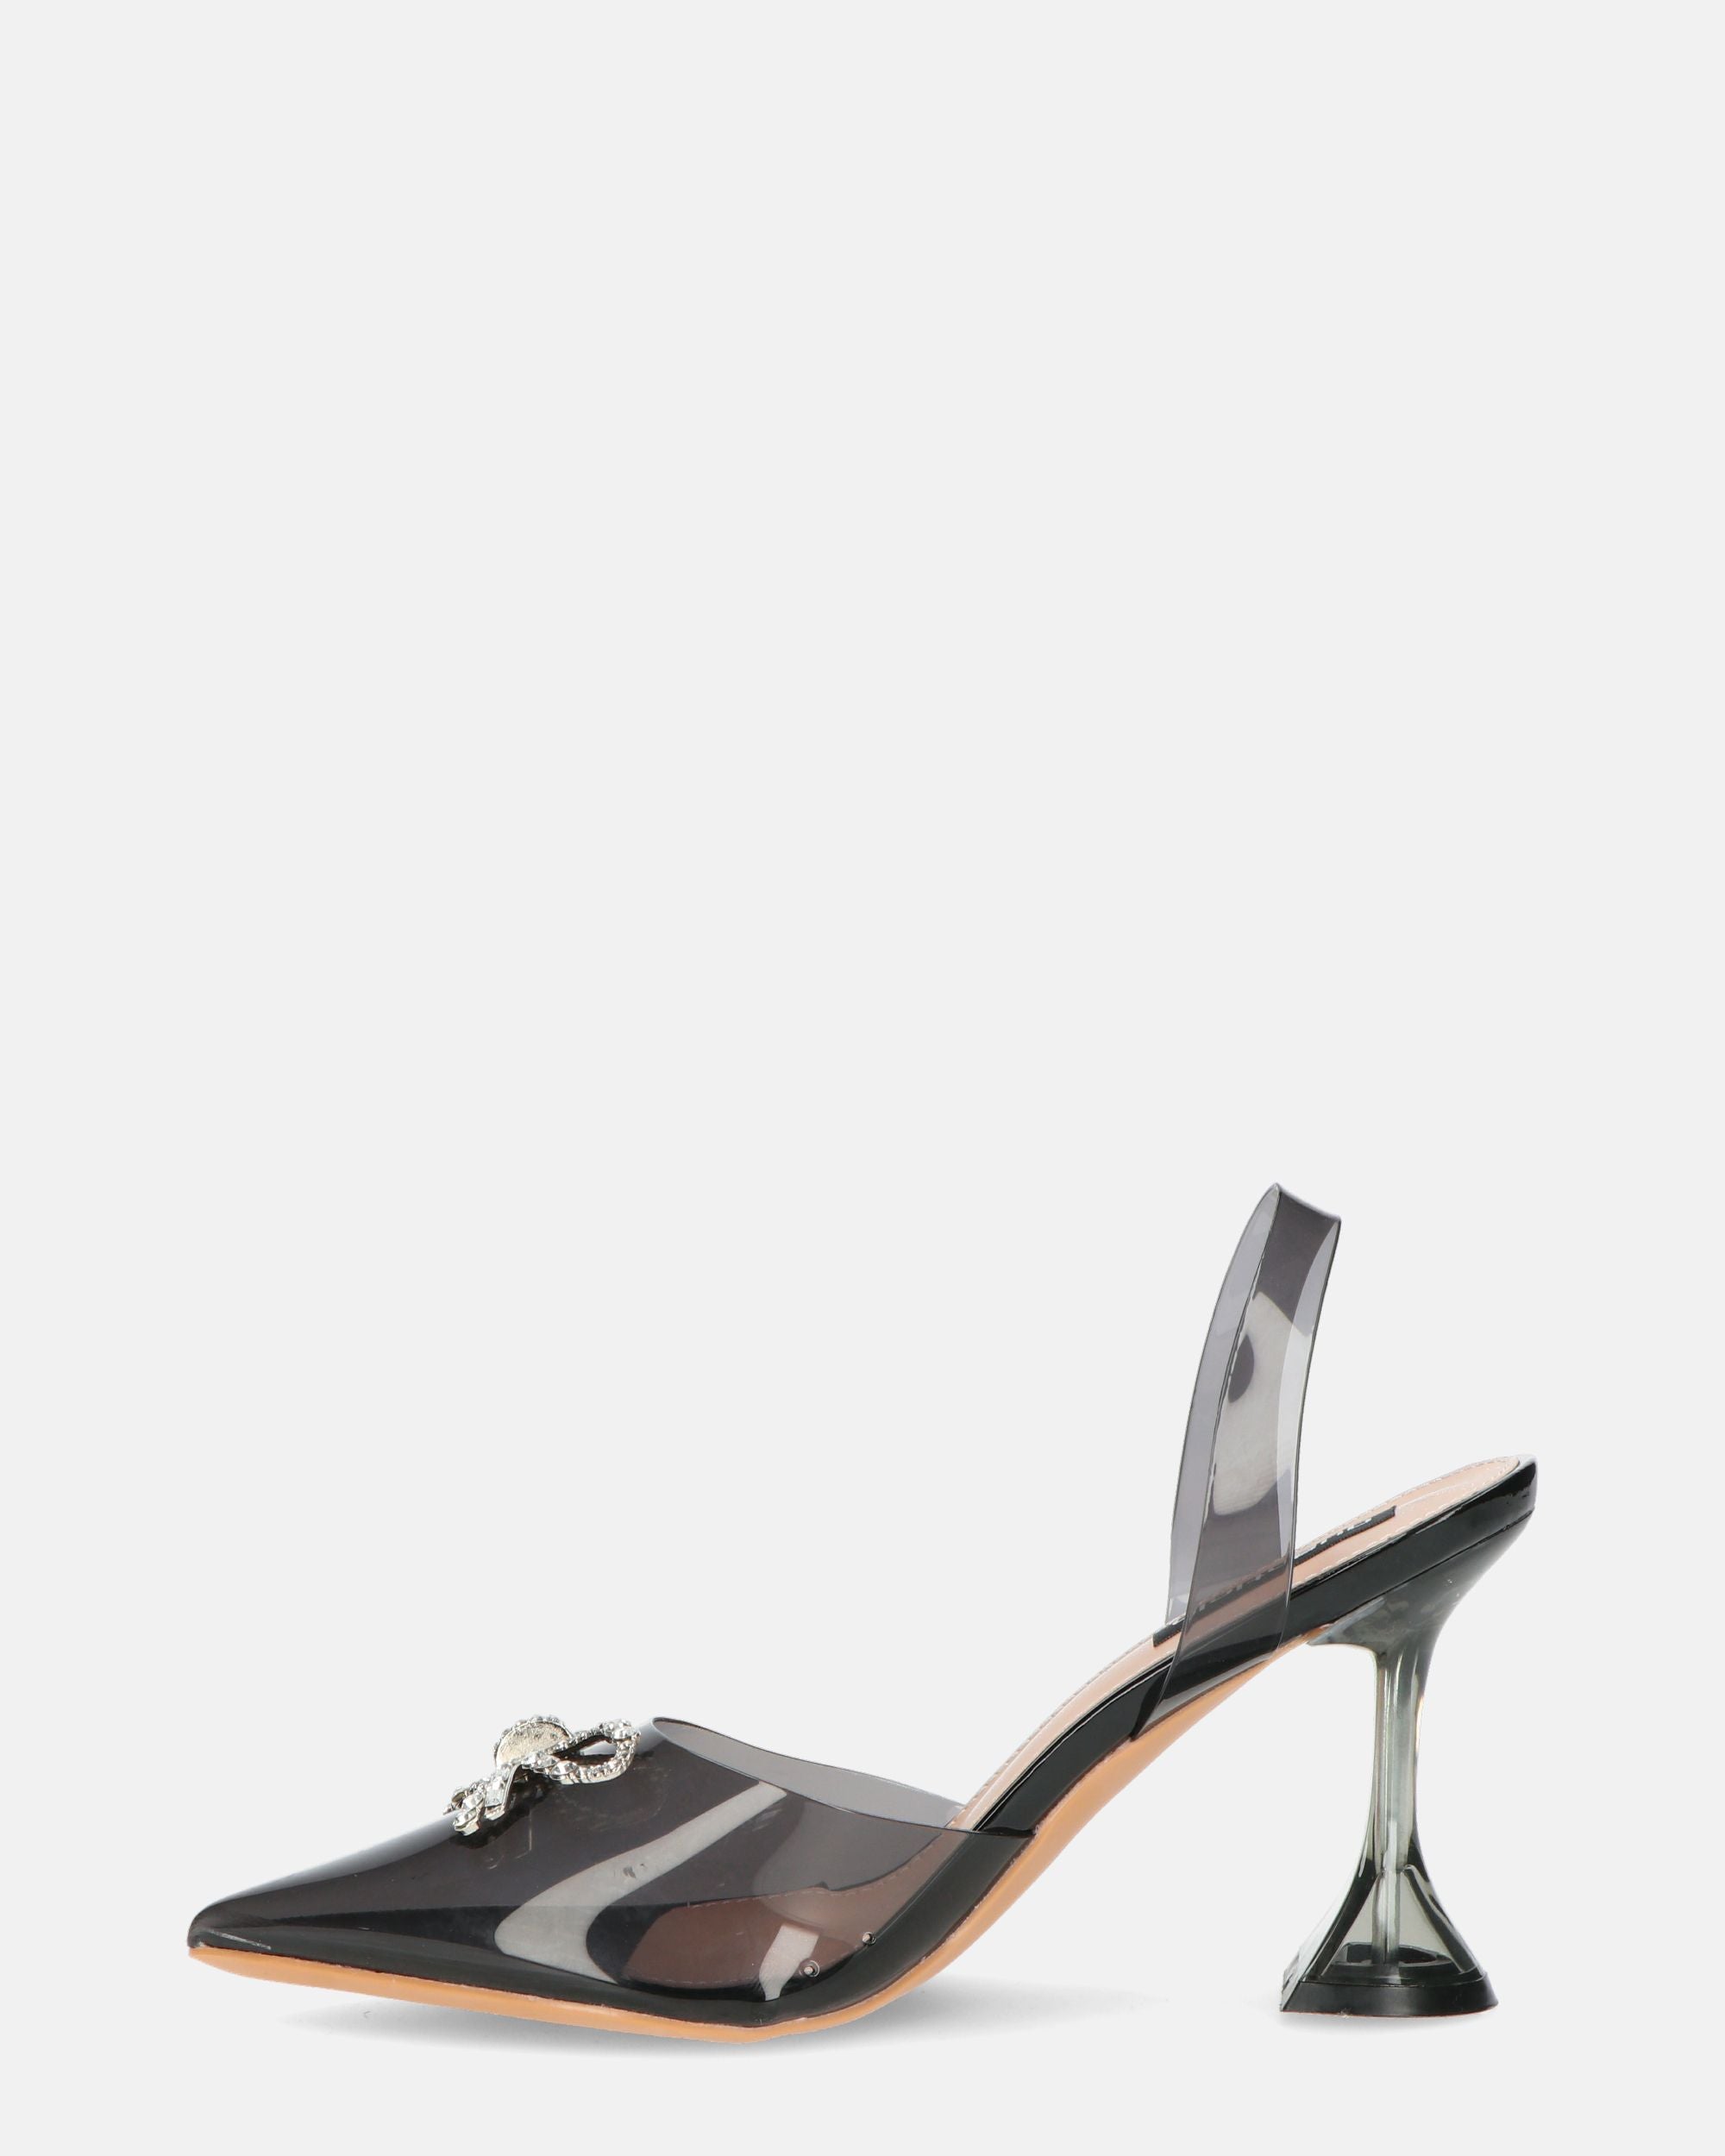 CONSUELO - black perspex heels with toe decorations